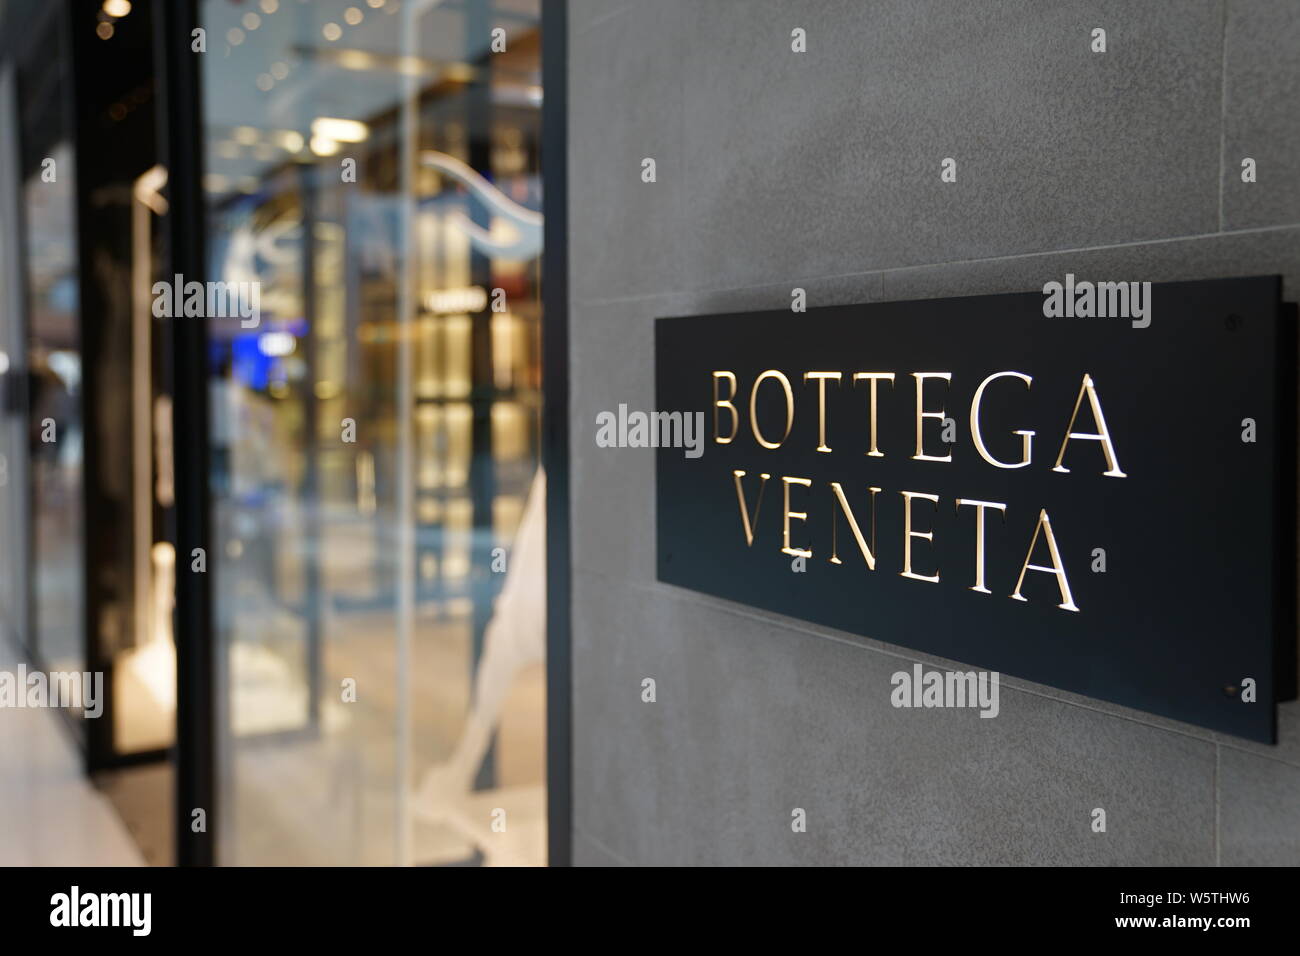 Bottega Veneta - The Mall Sanremo